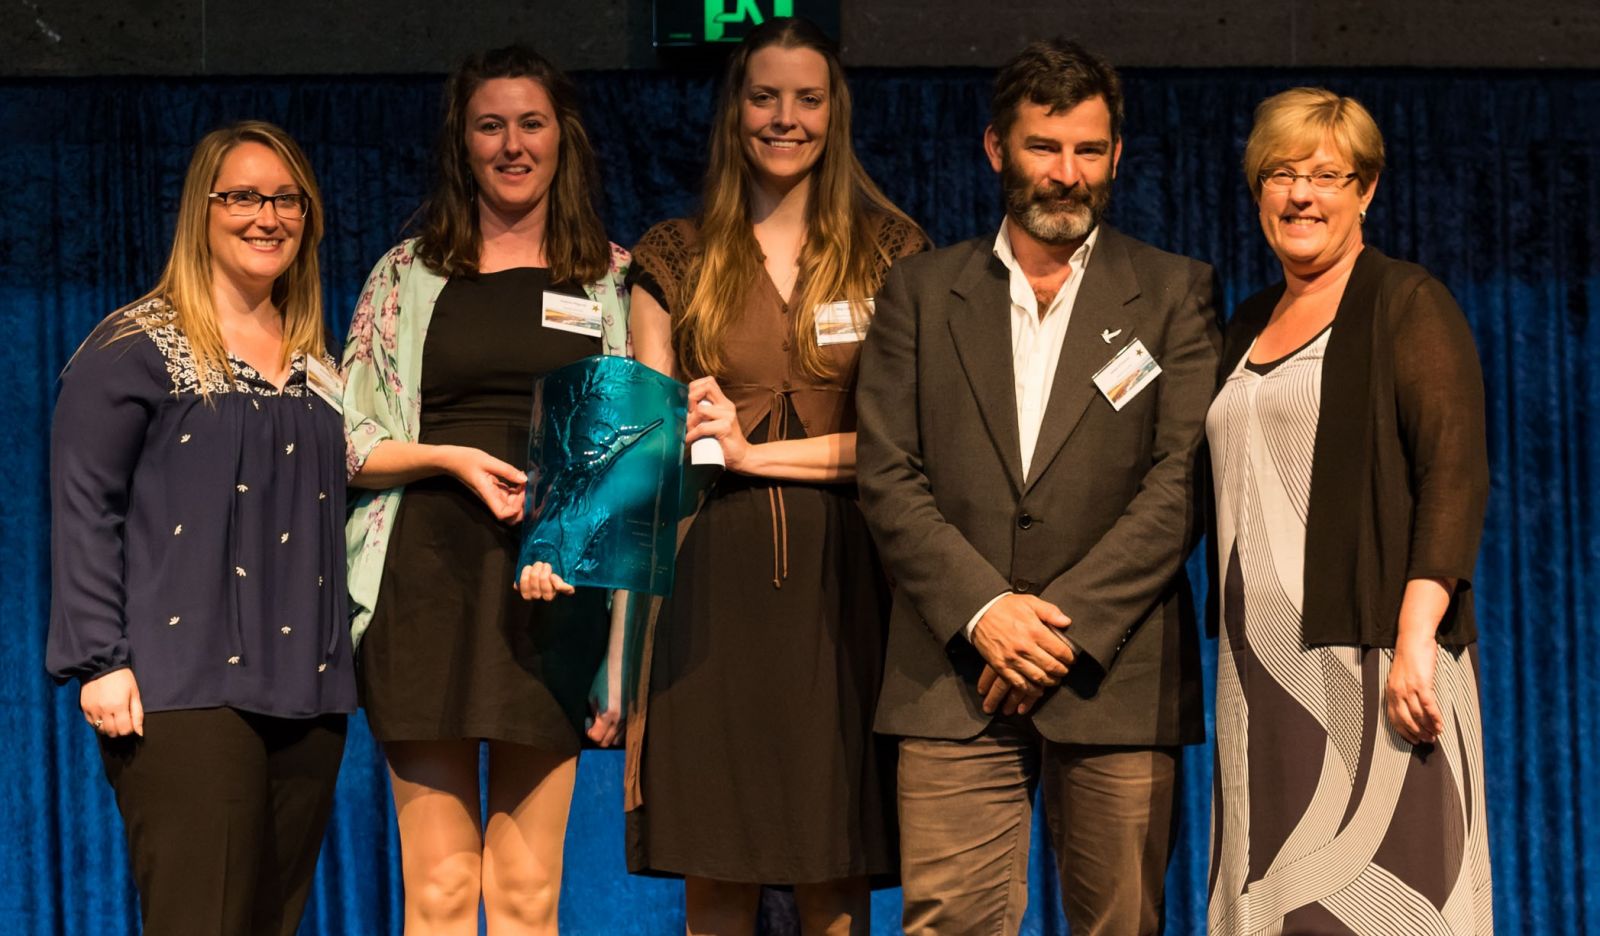 Education Award: BirdLife Australia - Bringing the Coast to the Classroom